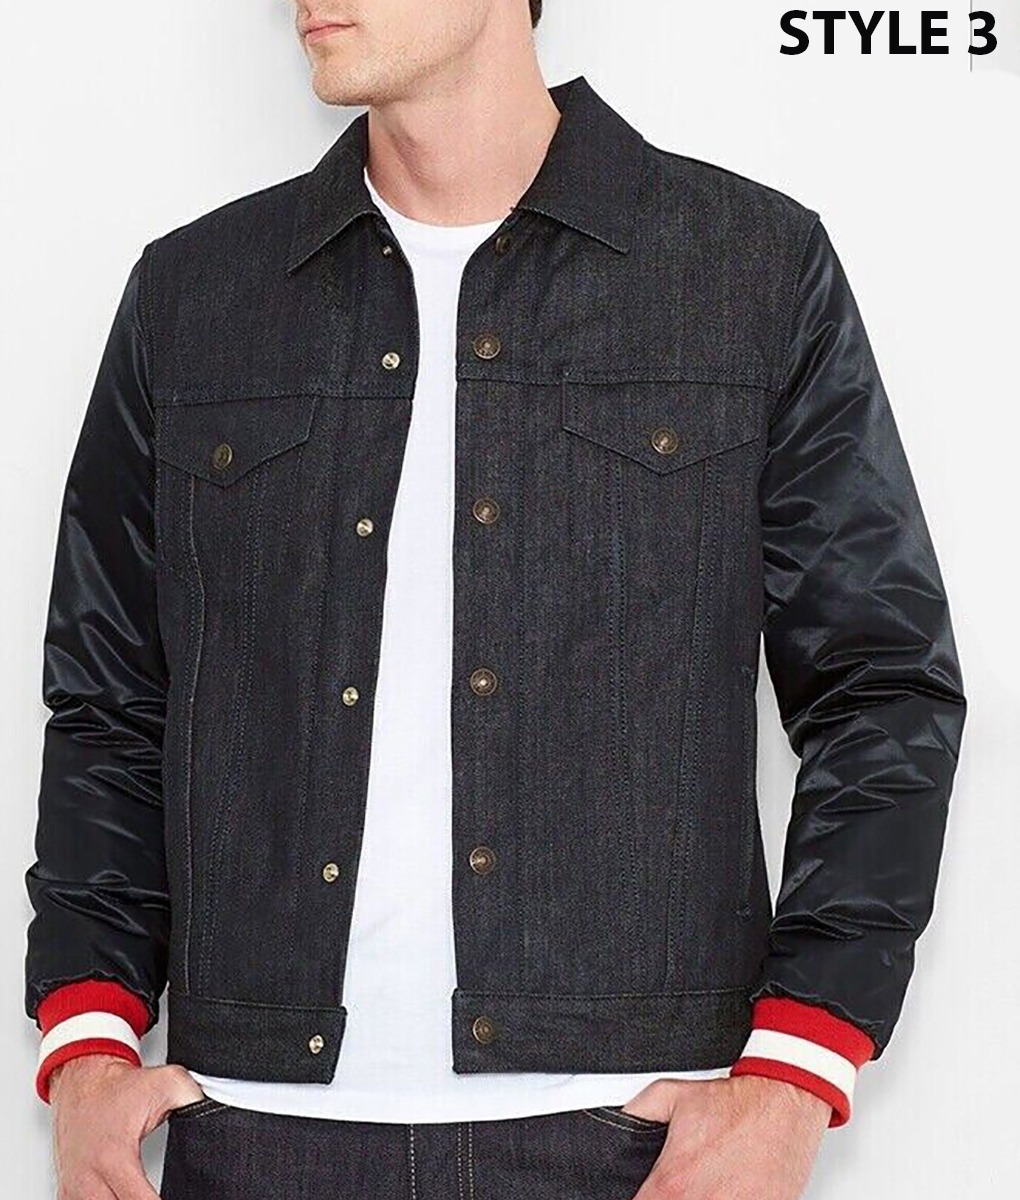 SF 49ers Black Denim Varsity Jacket Style-3 (2)